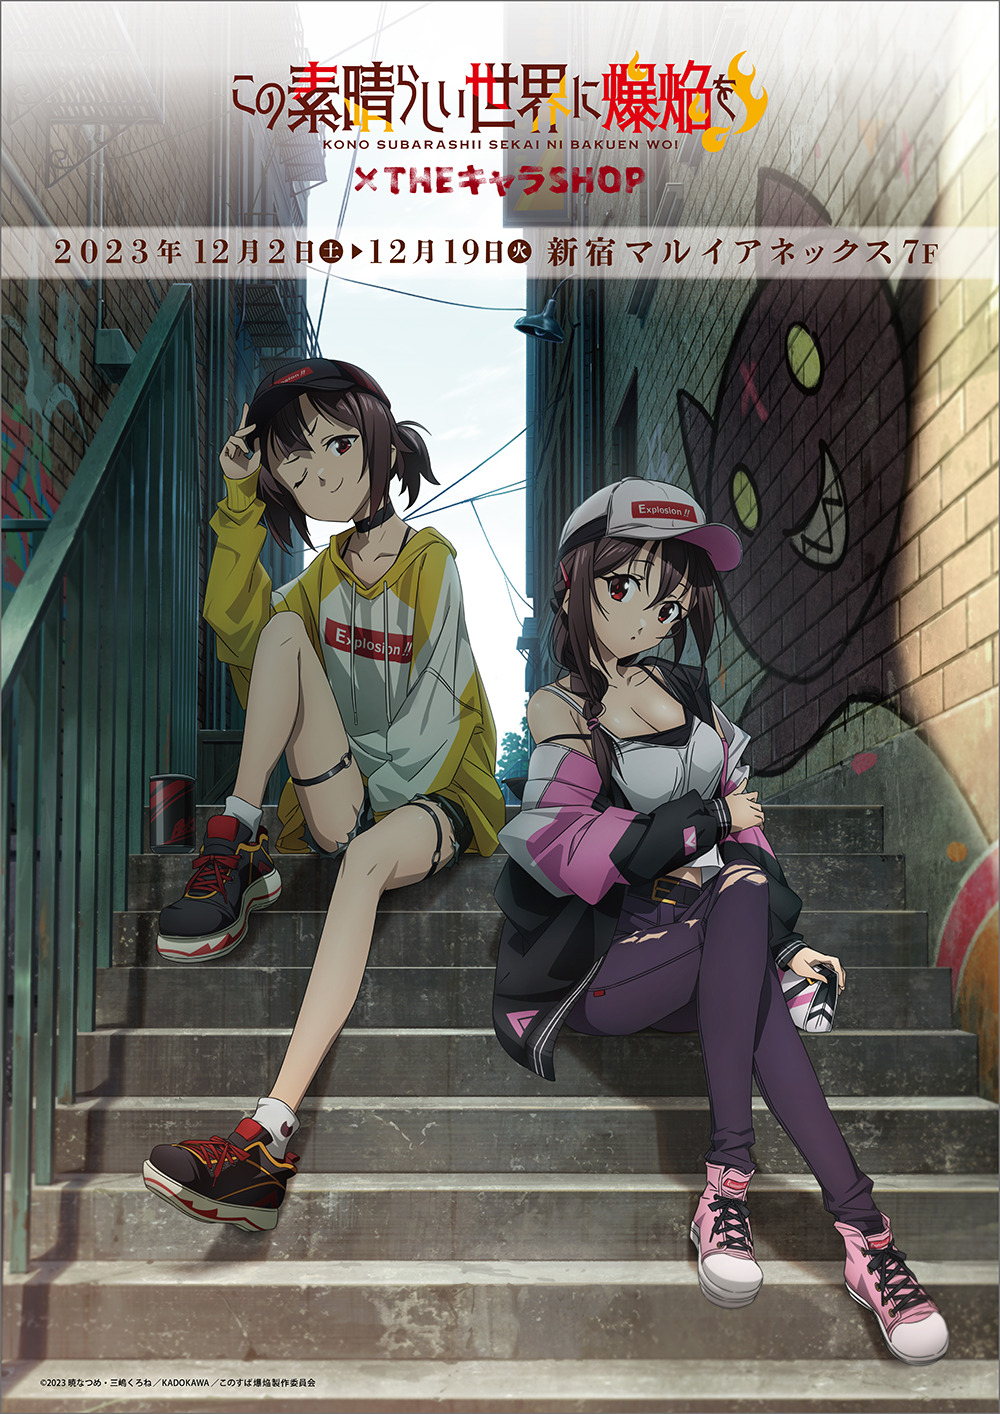 Anime Corner - JUST IN: Konosuba new anime project has